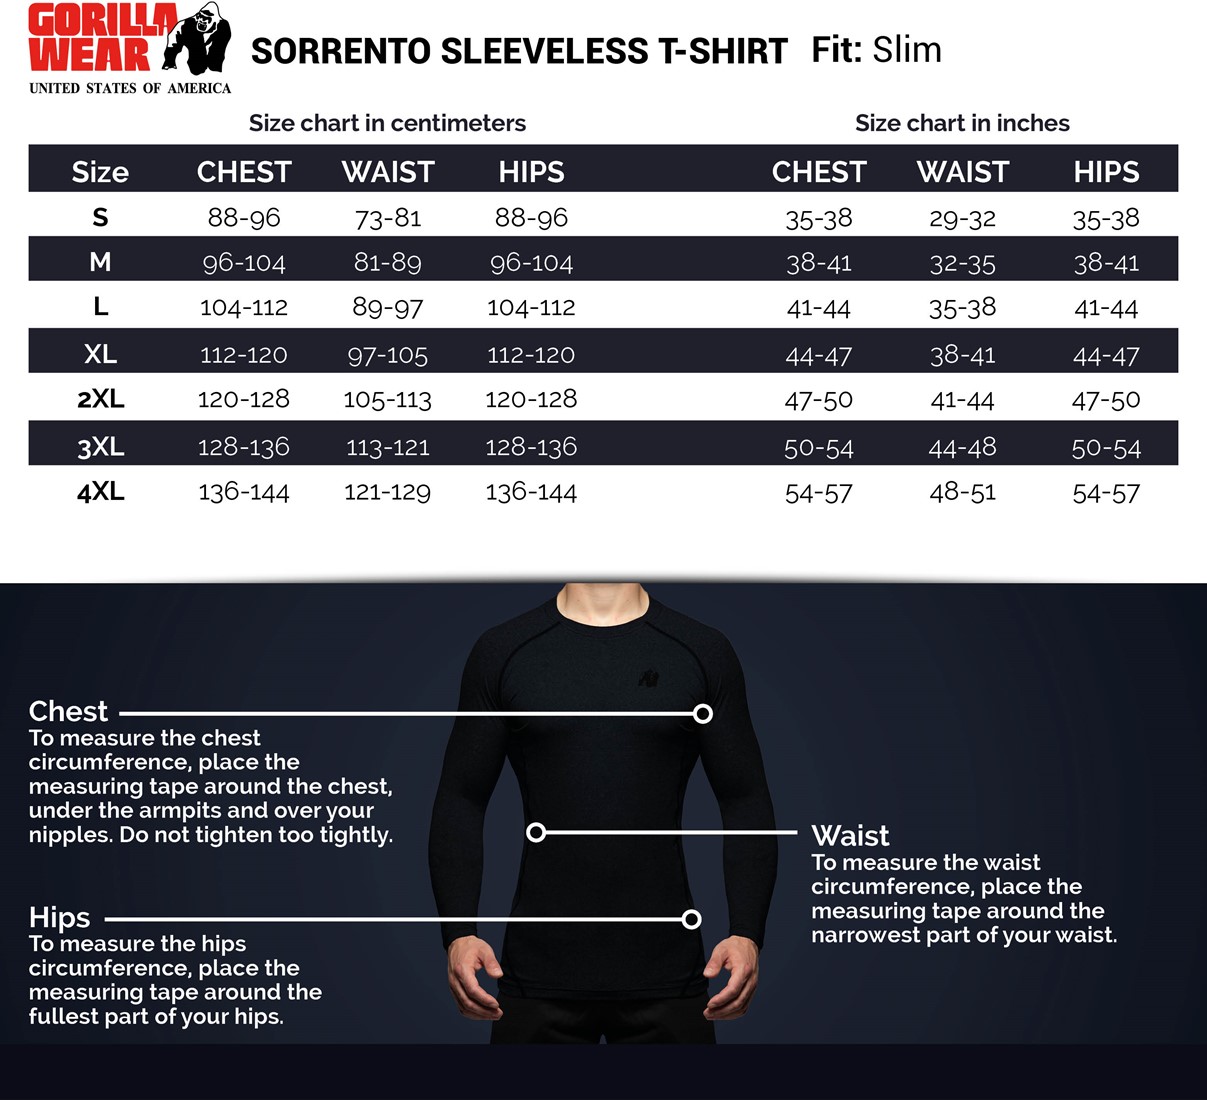 sorrento-sleeveless-t-shirt-sizechart (1)